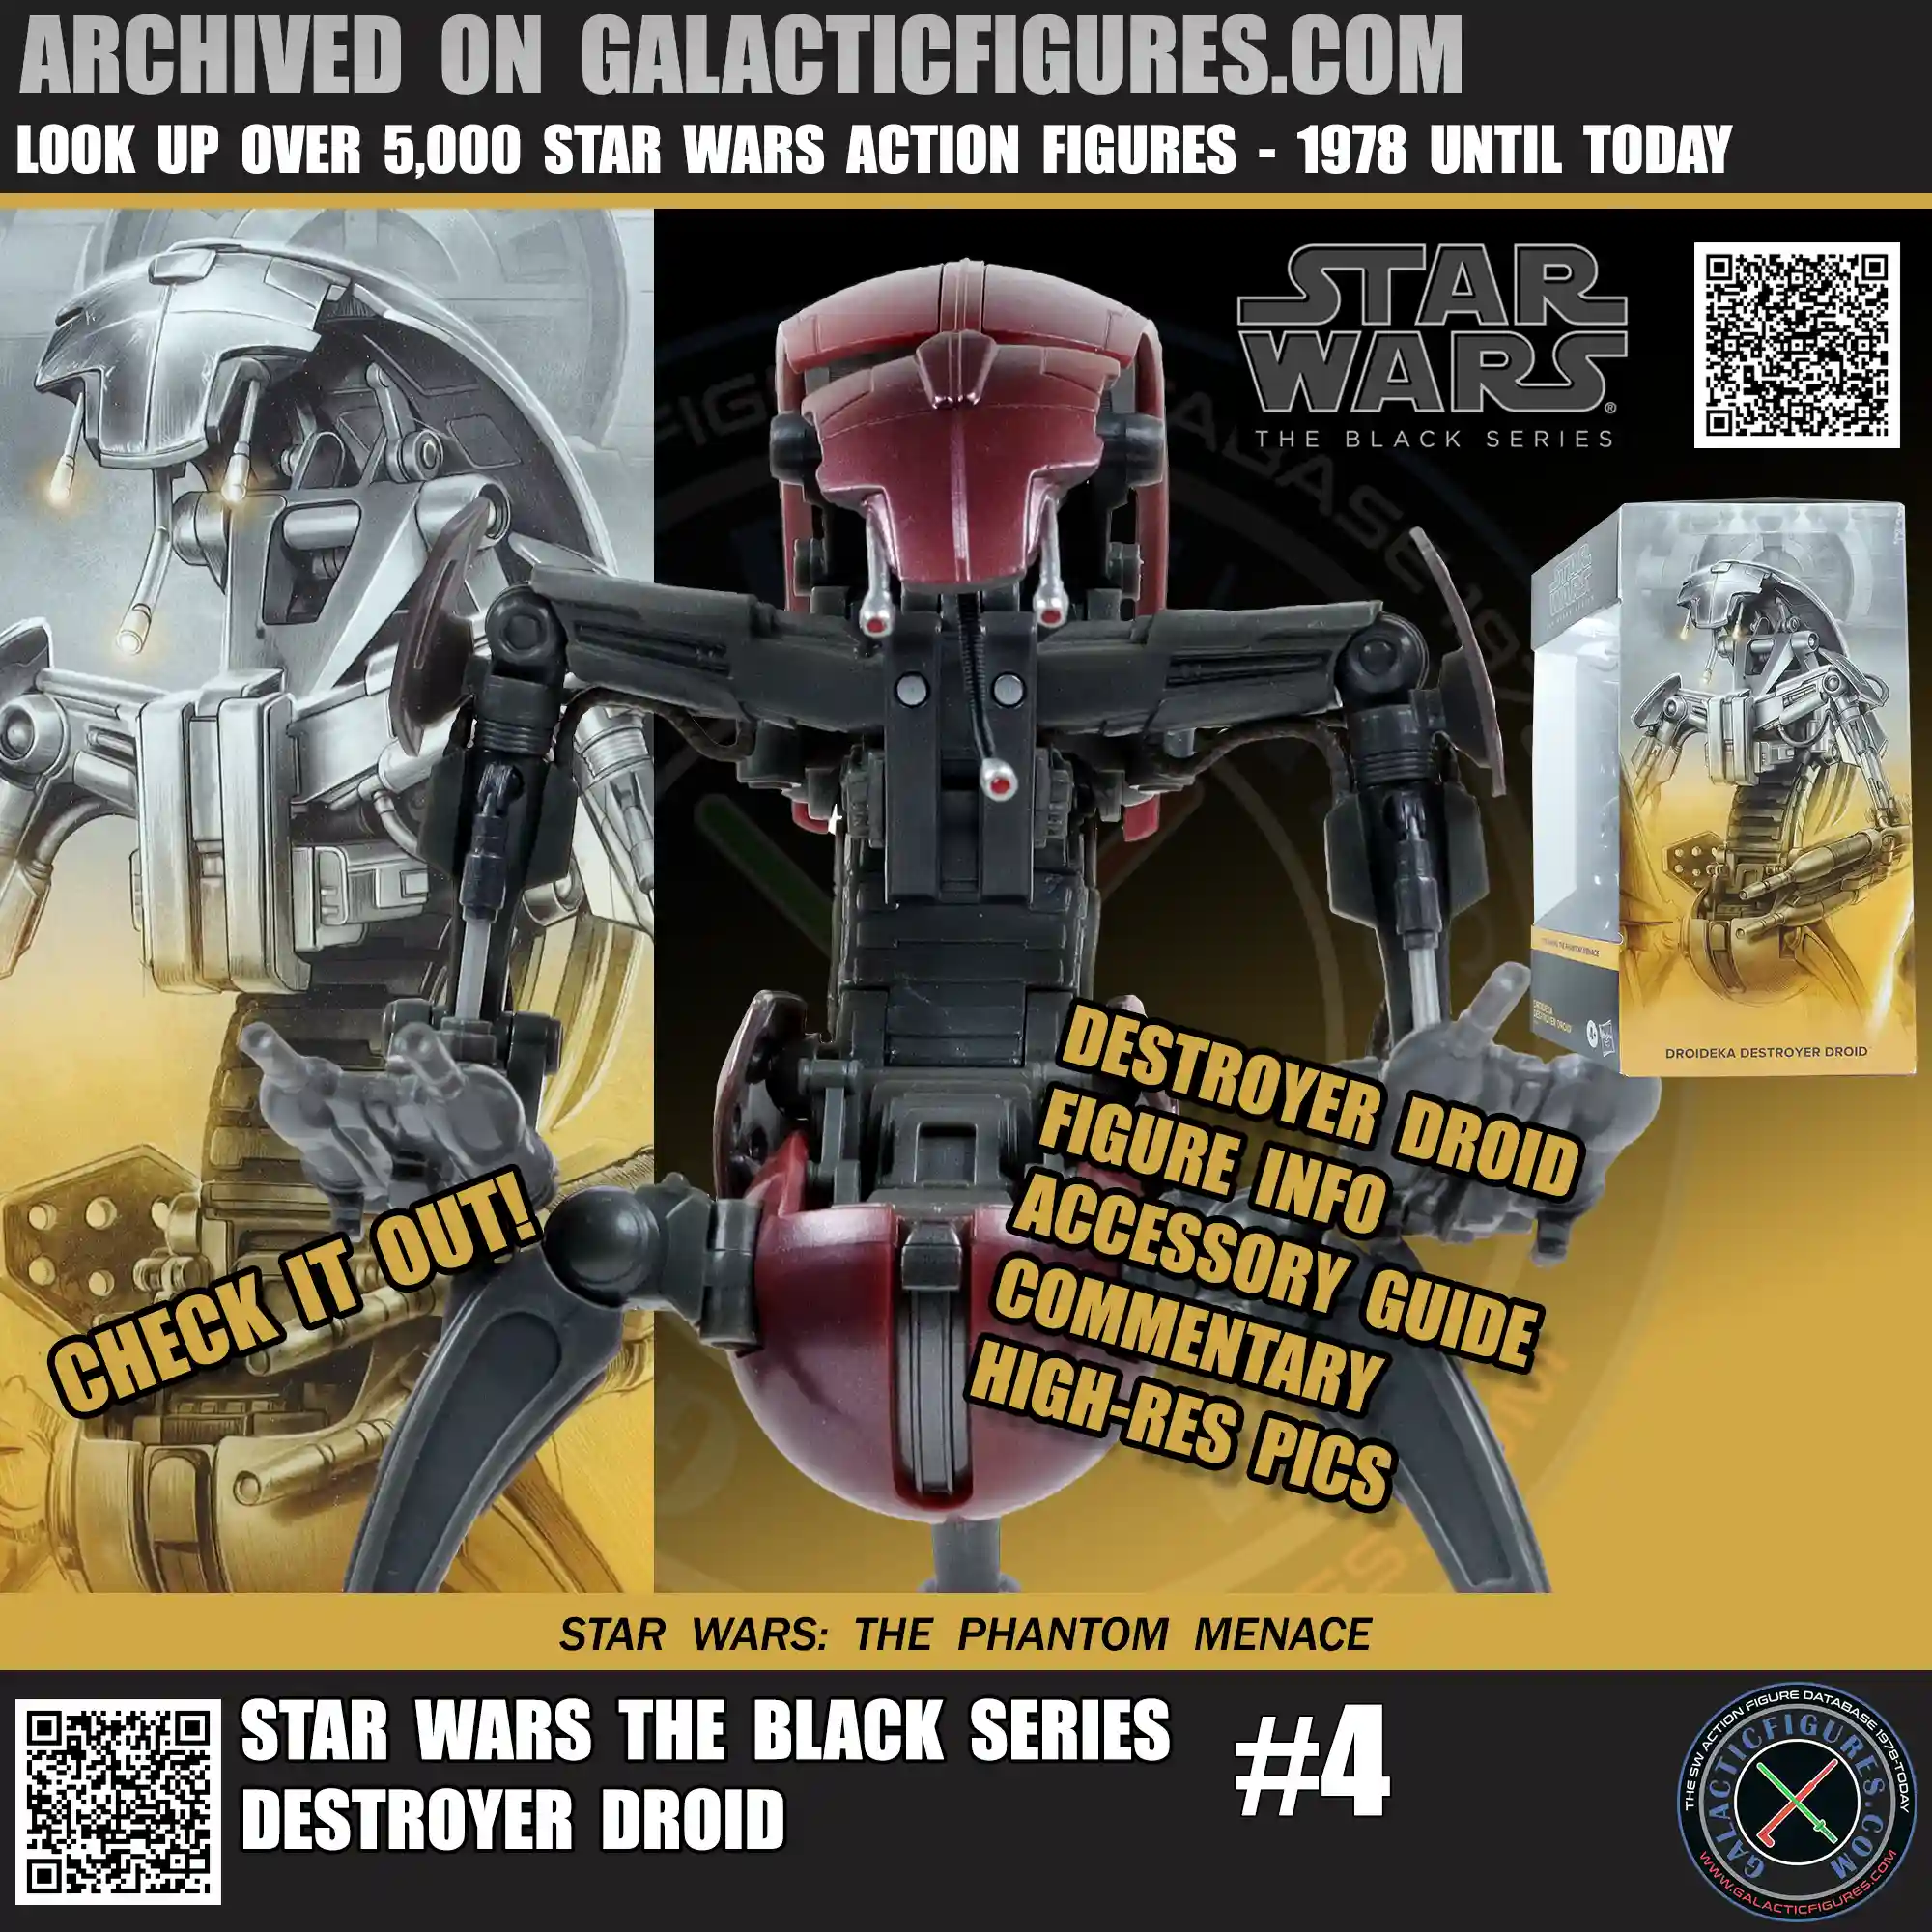 Black Series Destroyer Droid